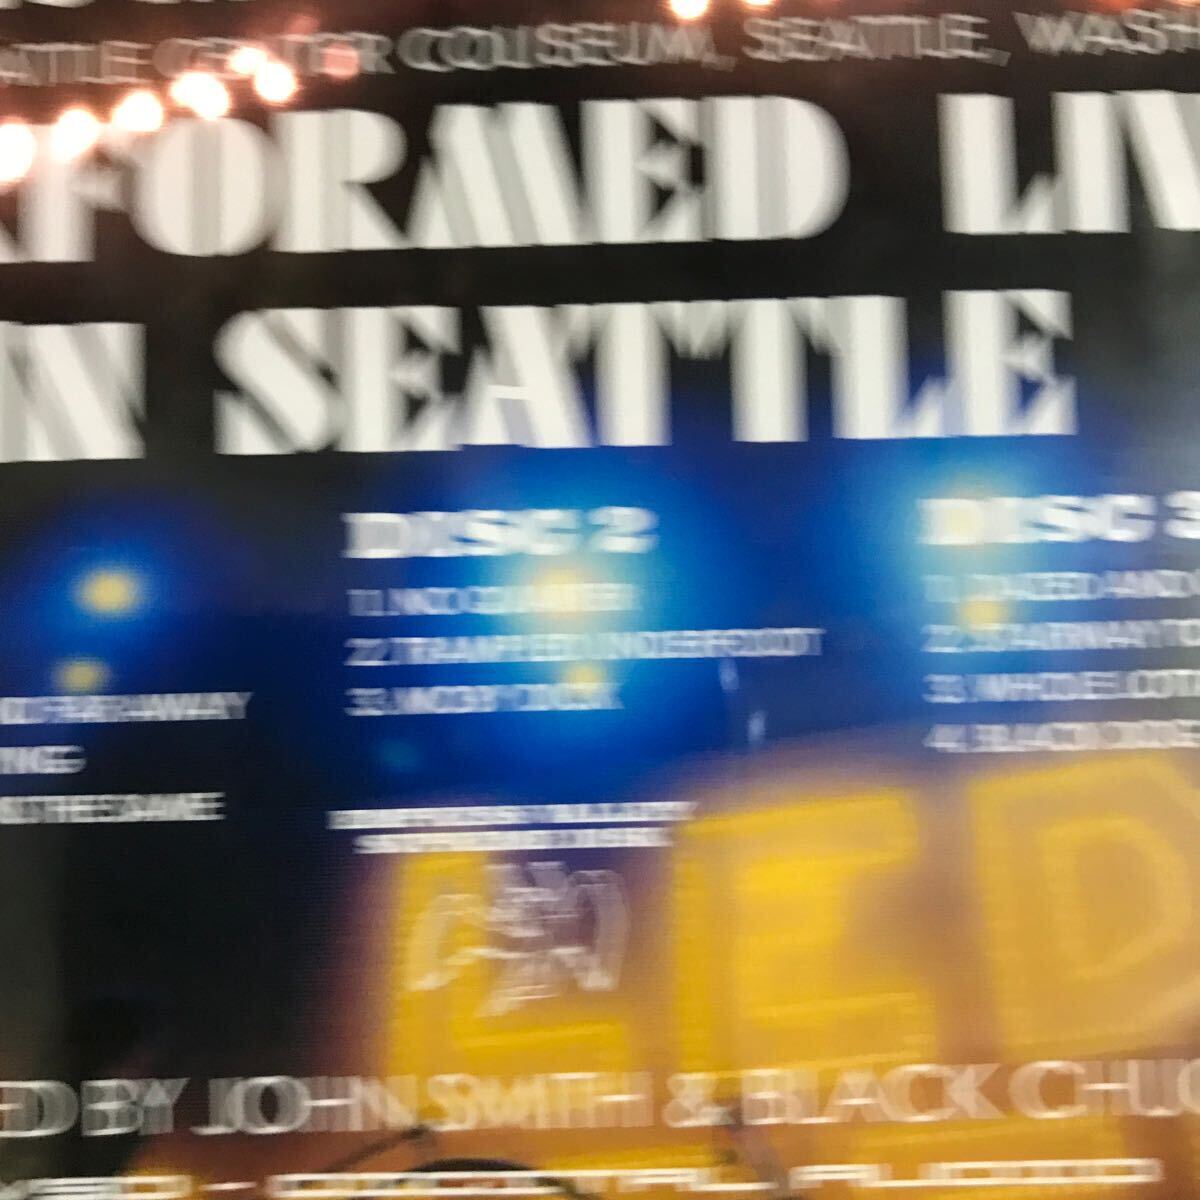 LED ZEPPELIN : Haven’t We Met Somewhere Before? Performed Live in Seattle (3CD) EVSDオリジナル！GW終わってしまった大特価！人気！